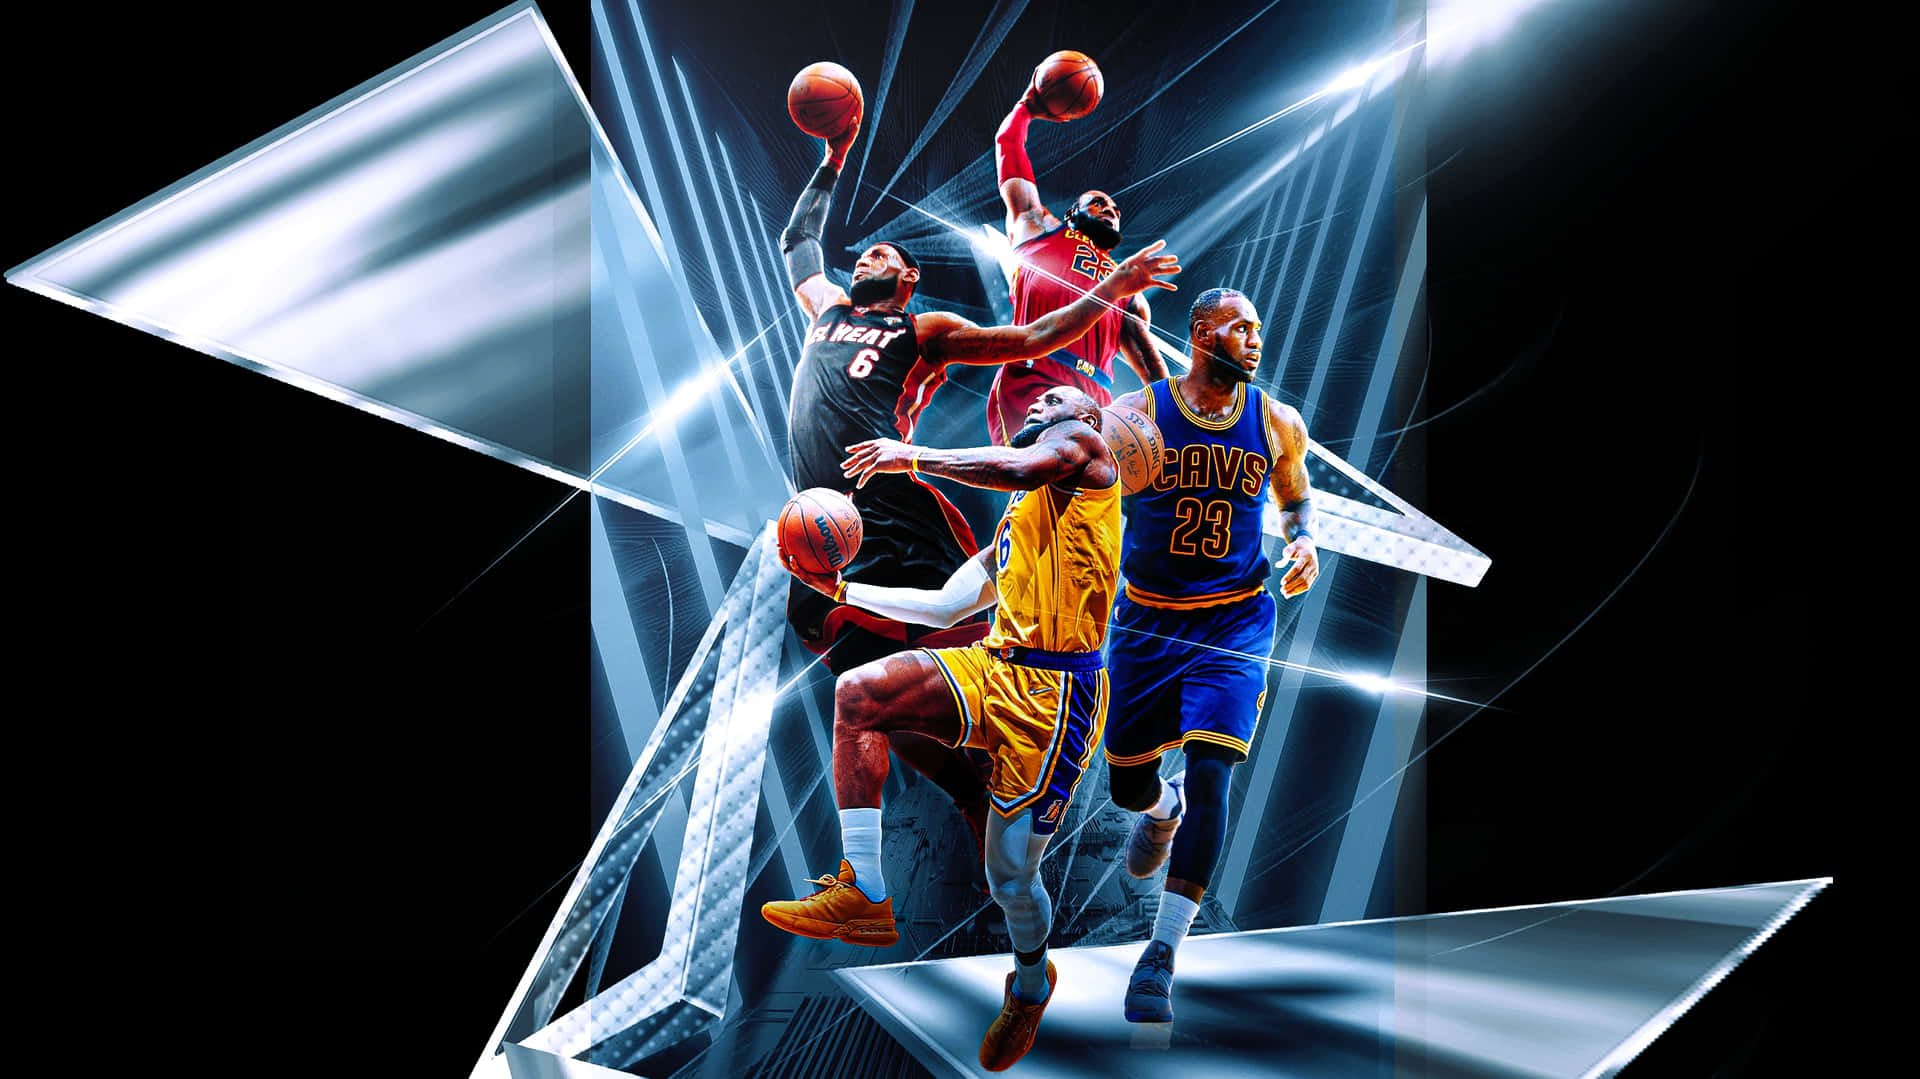 Lebron James and his Los Angeles Lakers teammates winning the 2020 NBA Championship